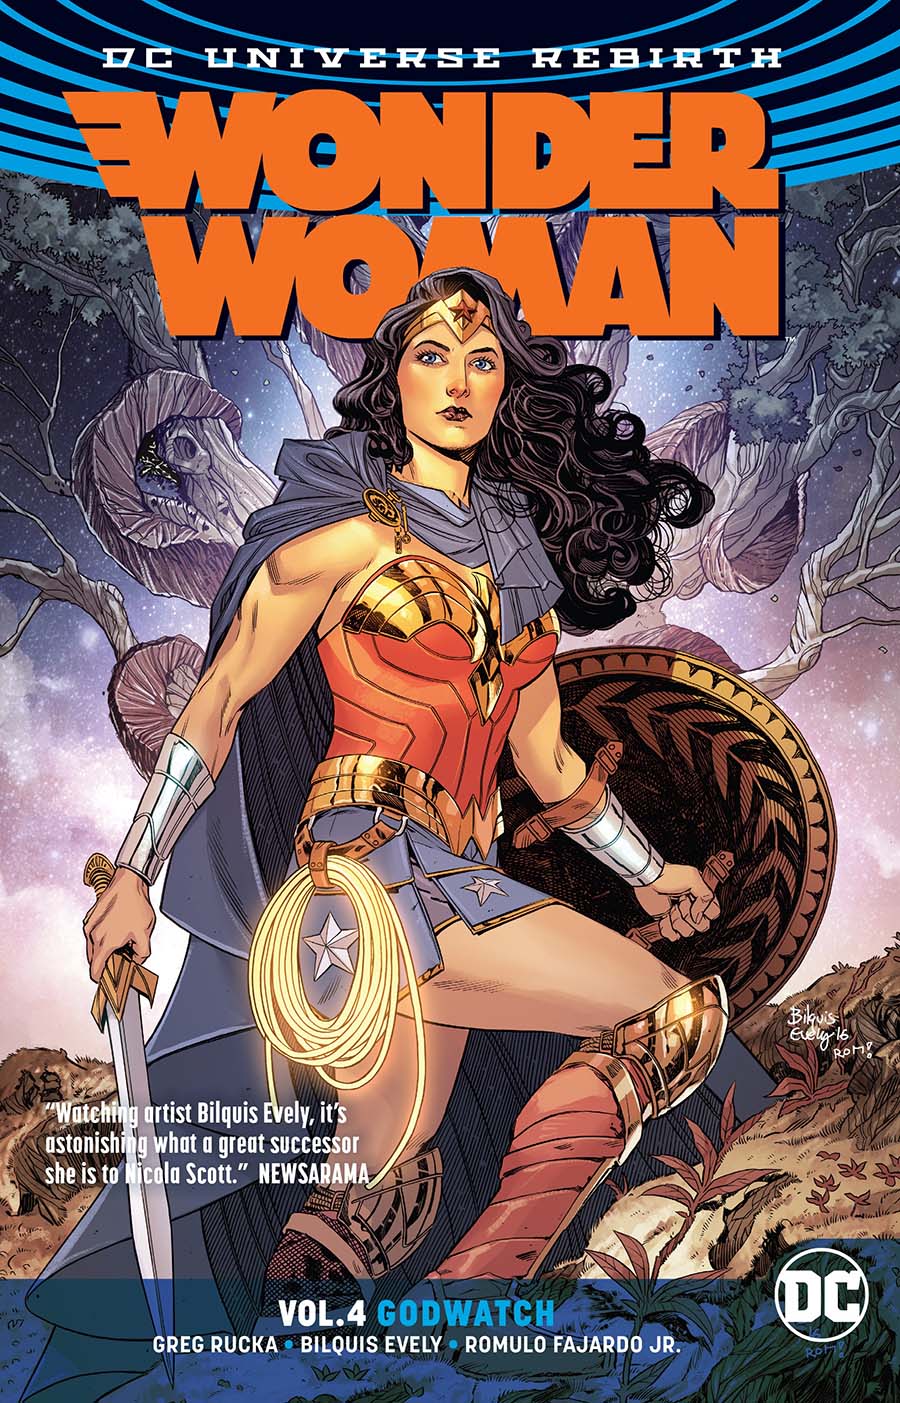 Wonder Woman (Rebirth) Vol 4 Godwatch TP